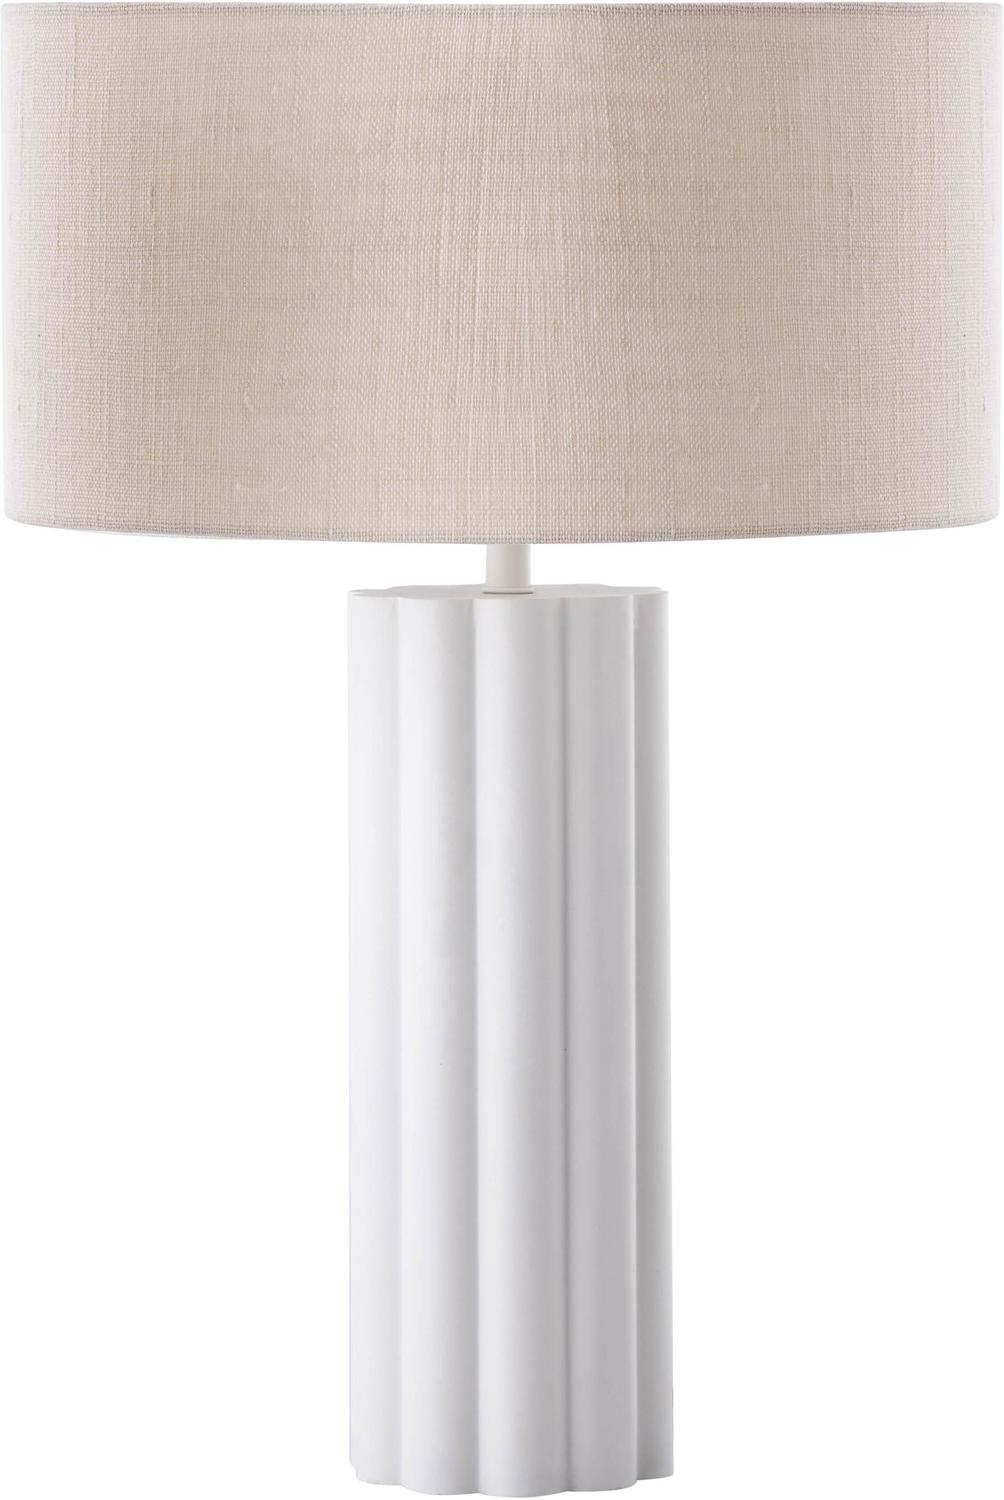  Contemporary Design Furniture Table Lamps Accent Tables Cream,White